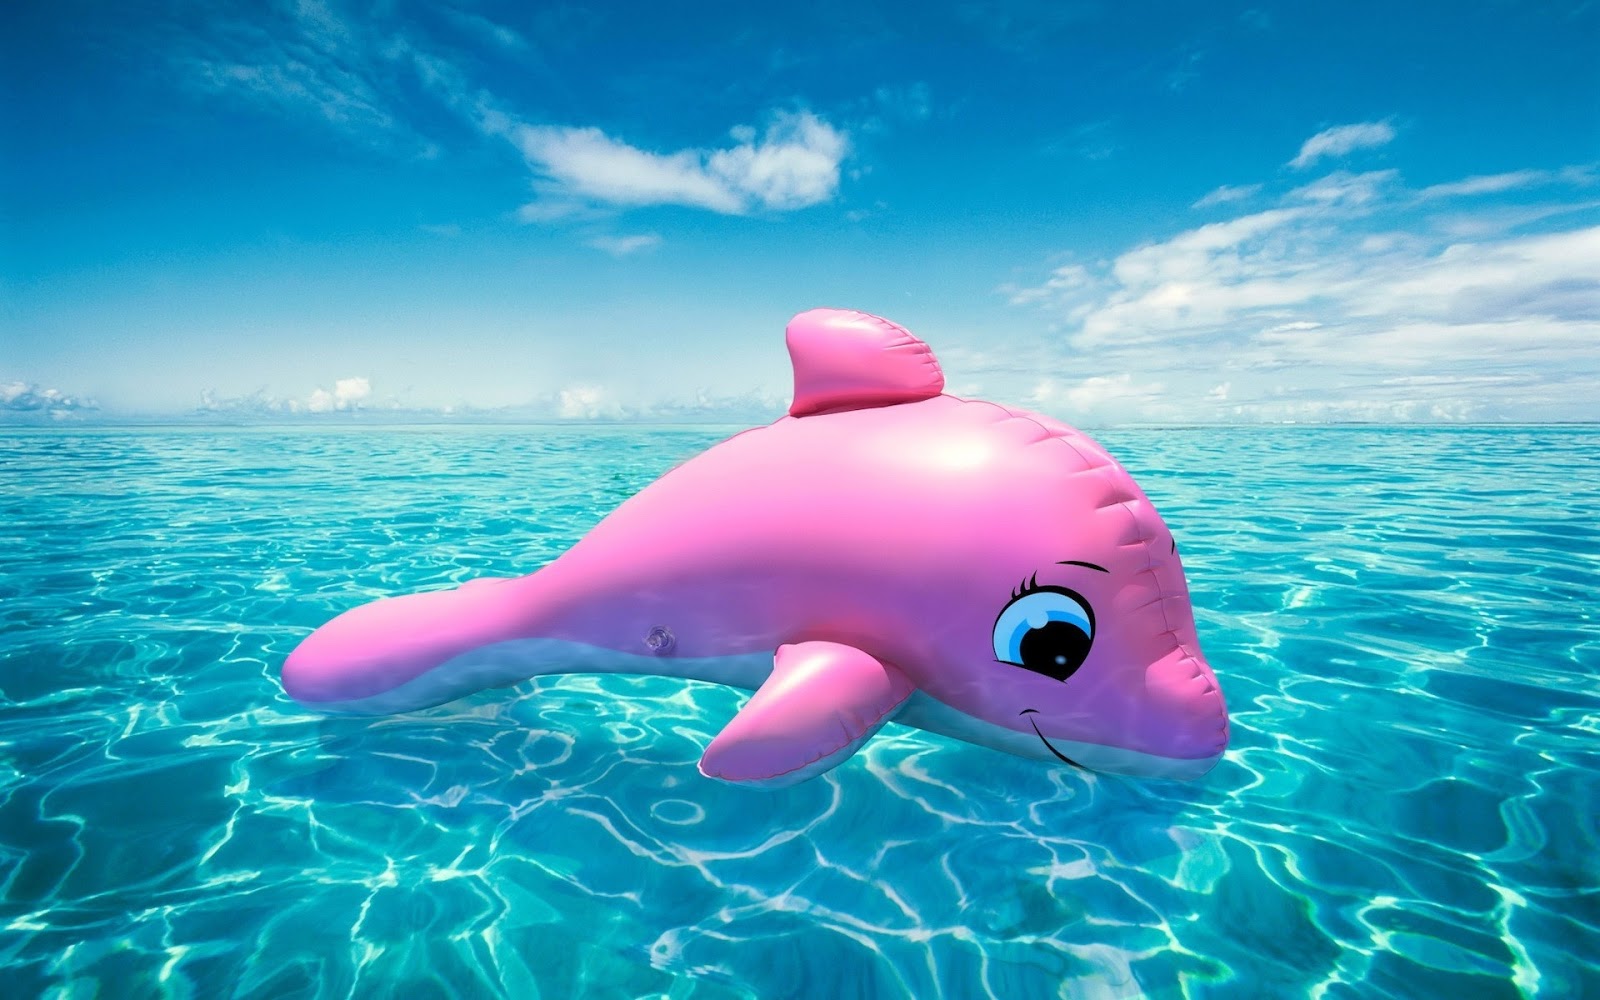 pink dolphin wallpaper,dolphin,marine mammal,cetacea,common bottlenose dolphin,pink